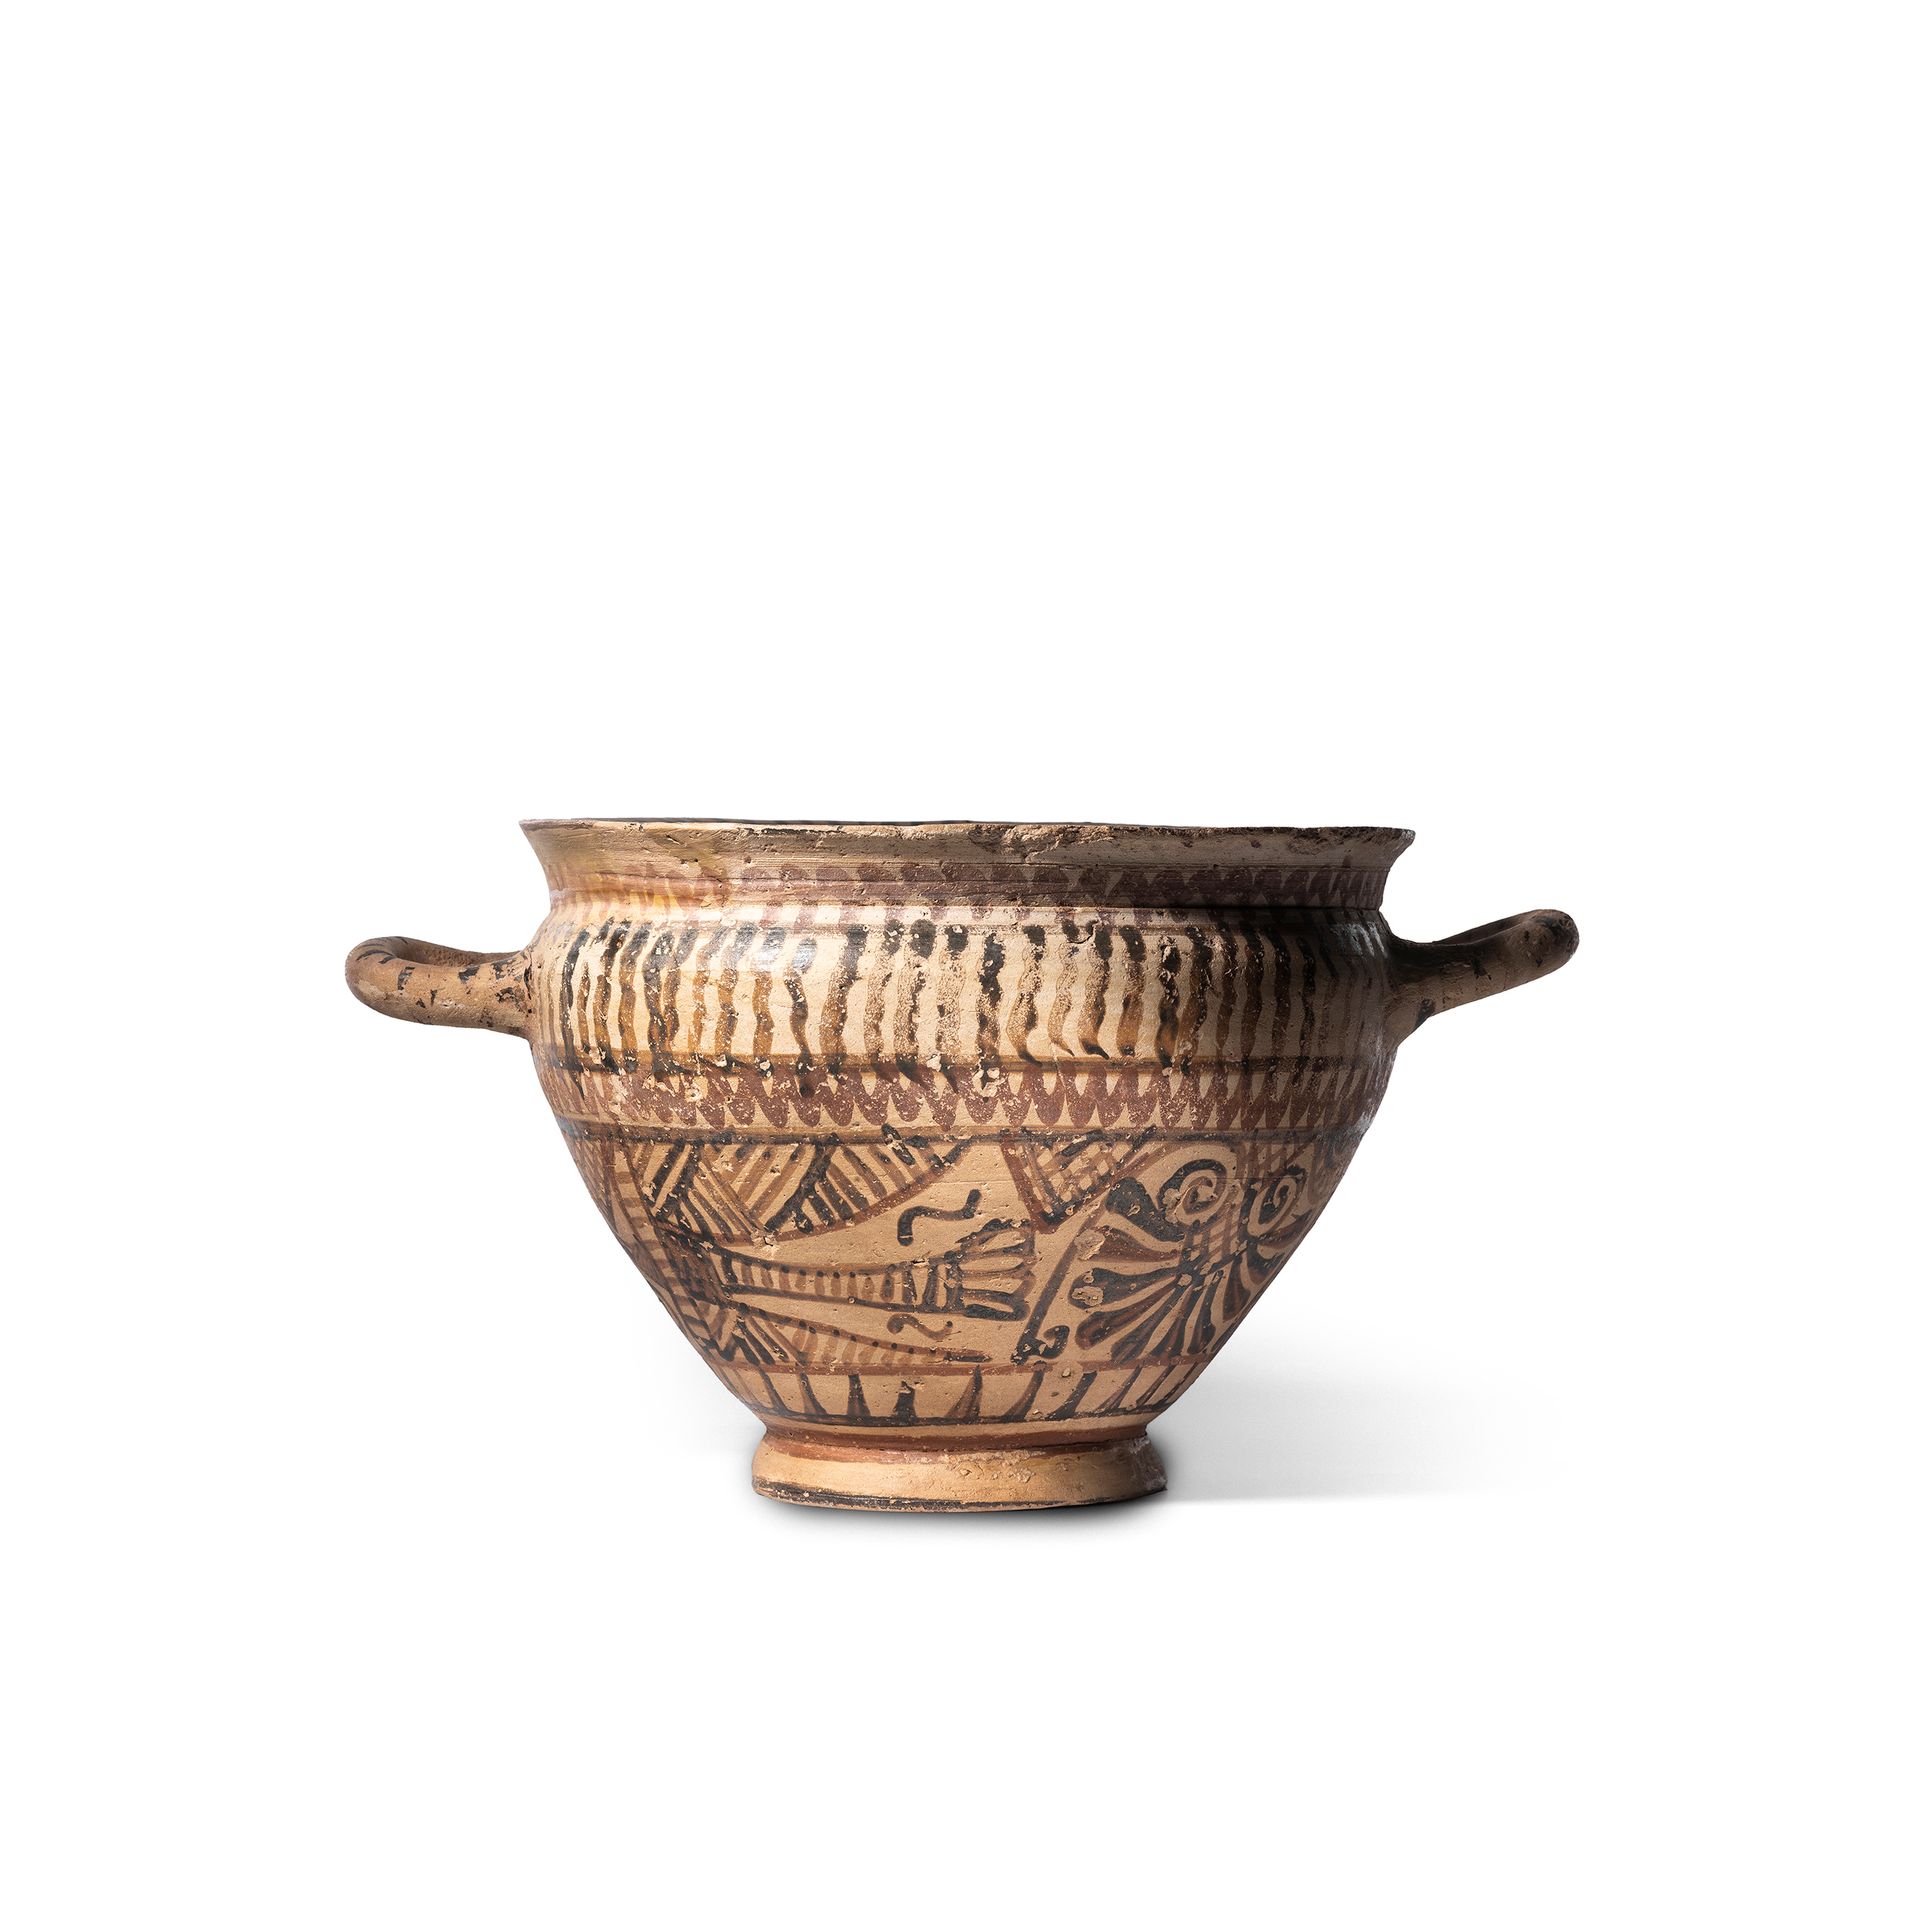 Null *SKYPHOS
Terracotta
H. 14 cm; L. 18,5 cm 
Grecia, VIII-VII secolo a.C. 

Pr&hellip;